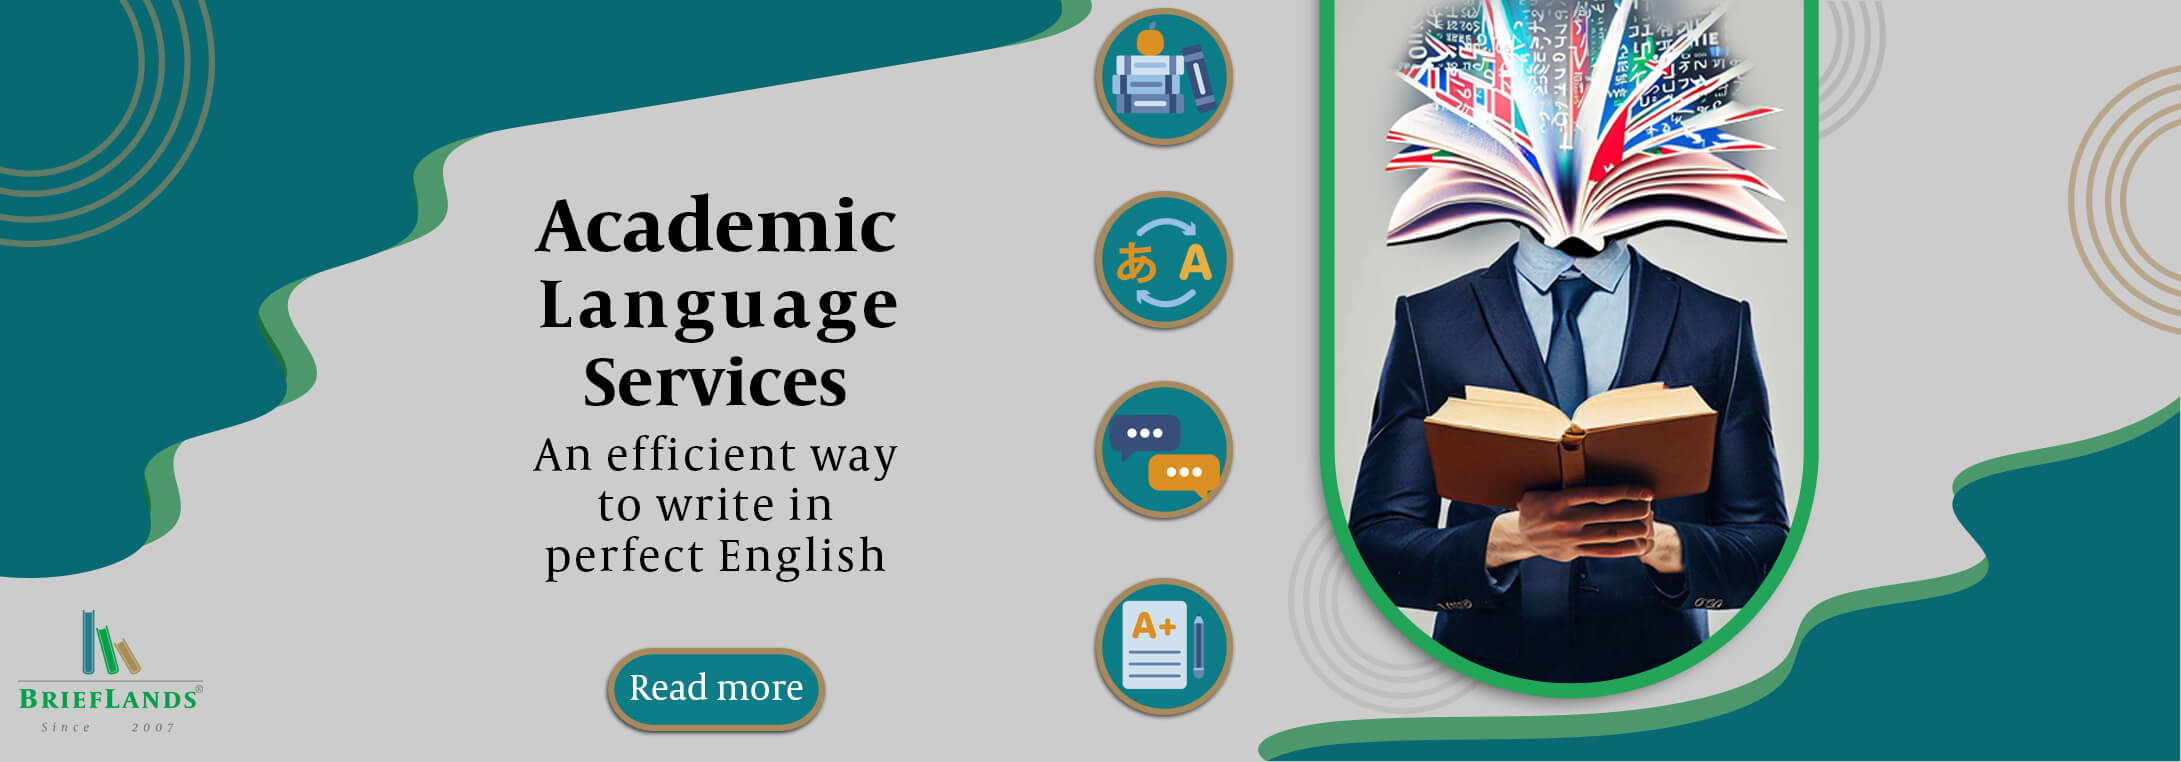 Academic Language Services